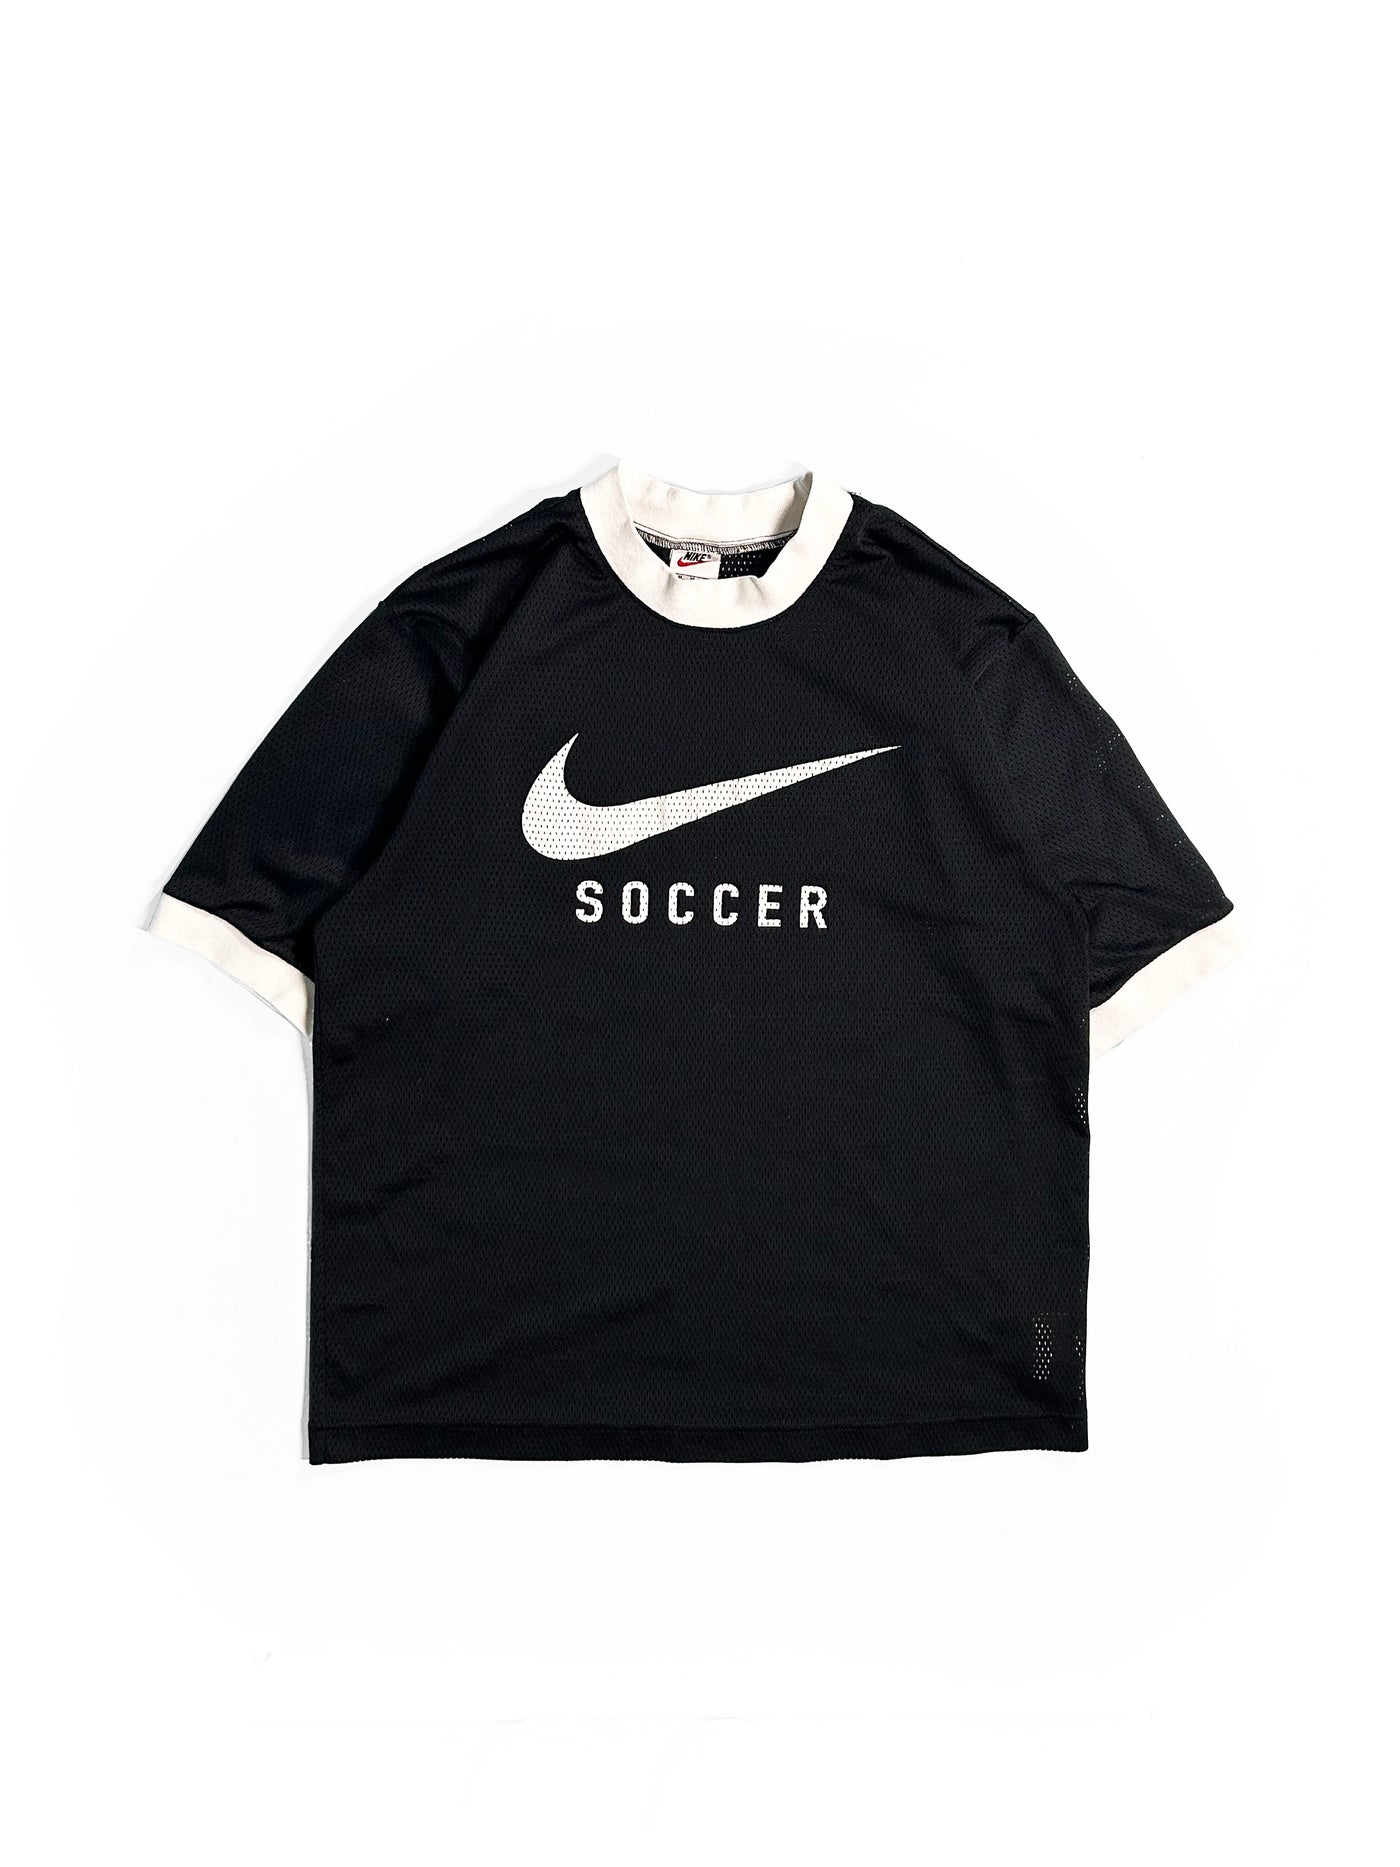 Vintage 90s Nike Soccer T-Shirt